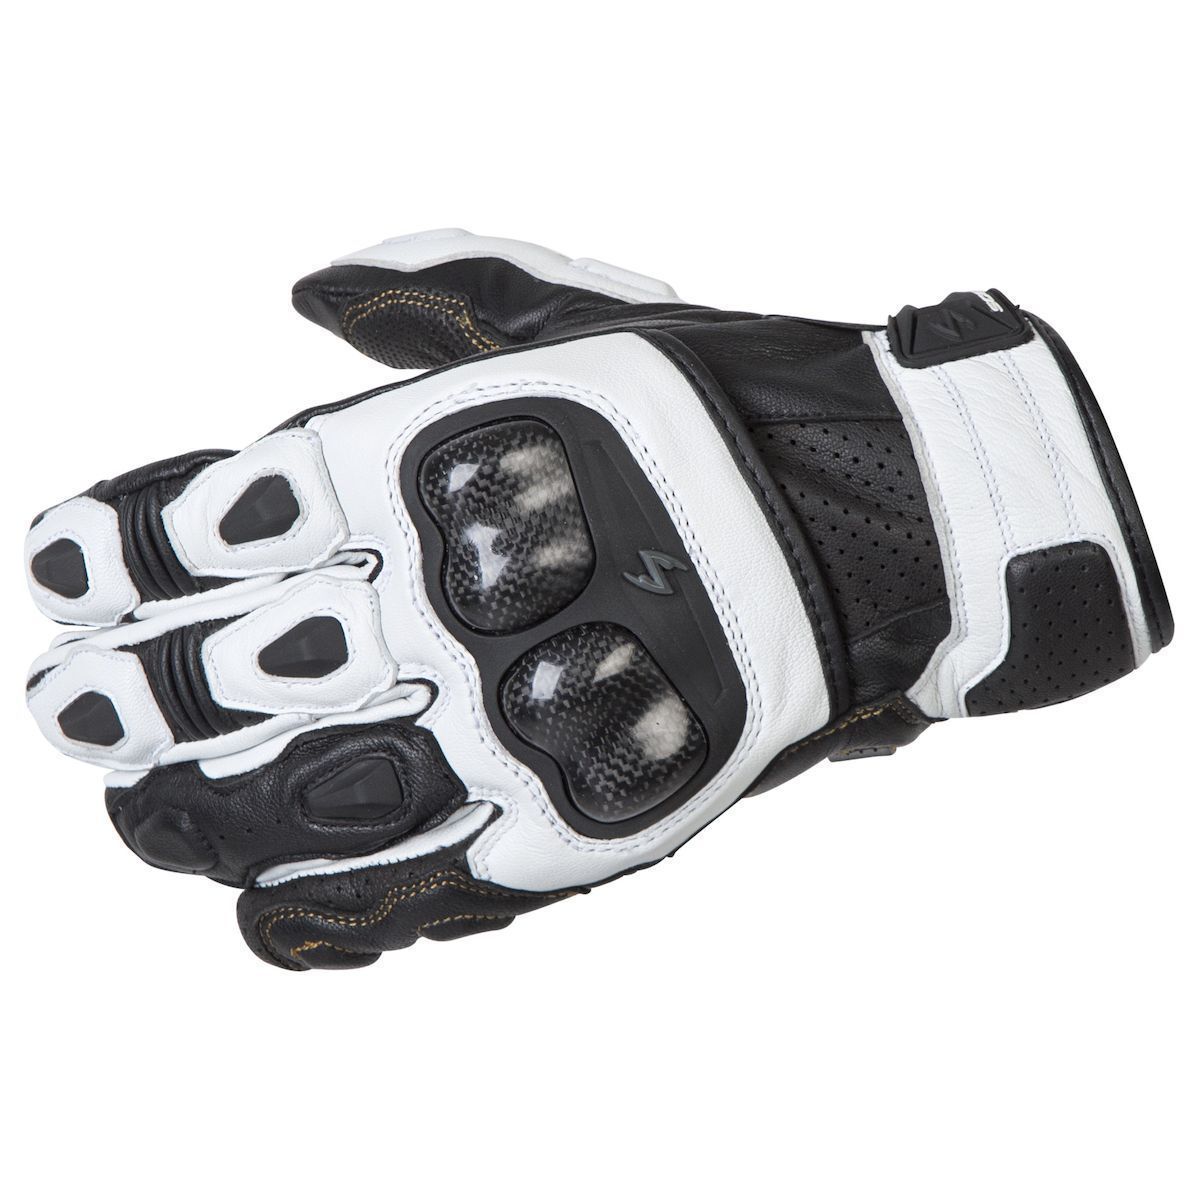 Scorpion SGS MKII White Leather Gloves